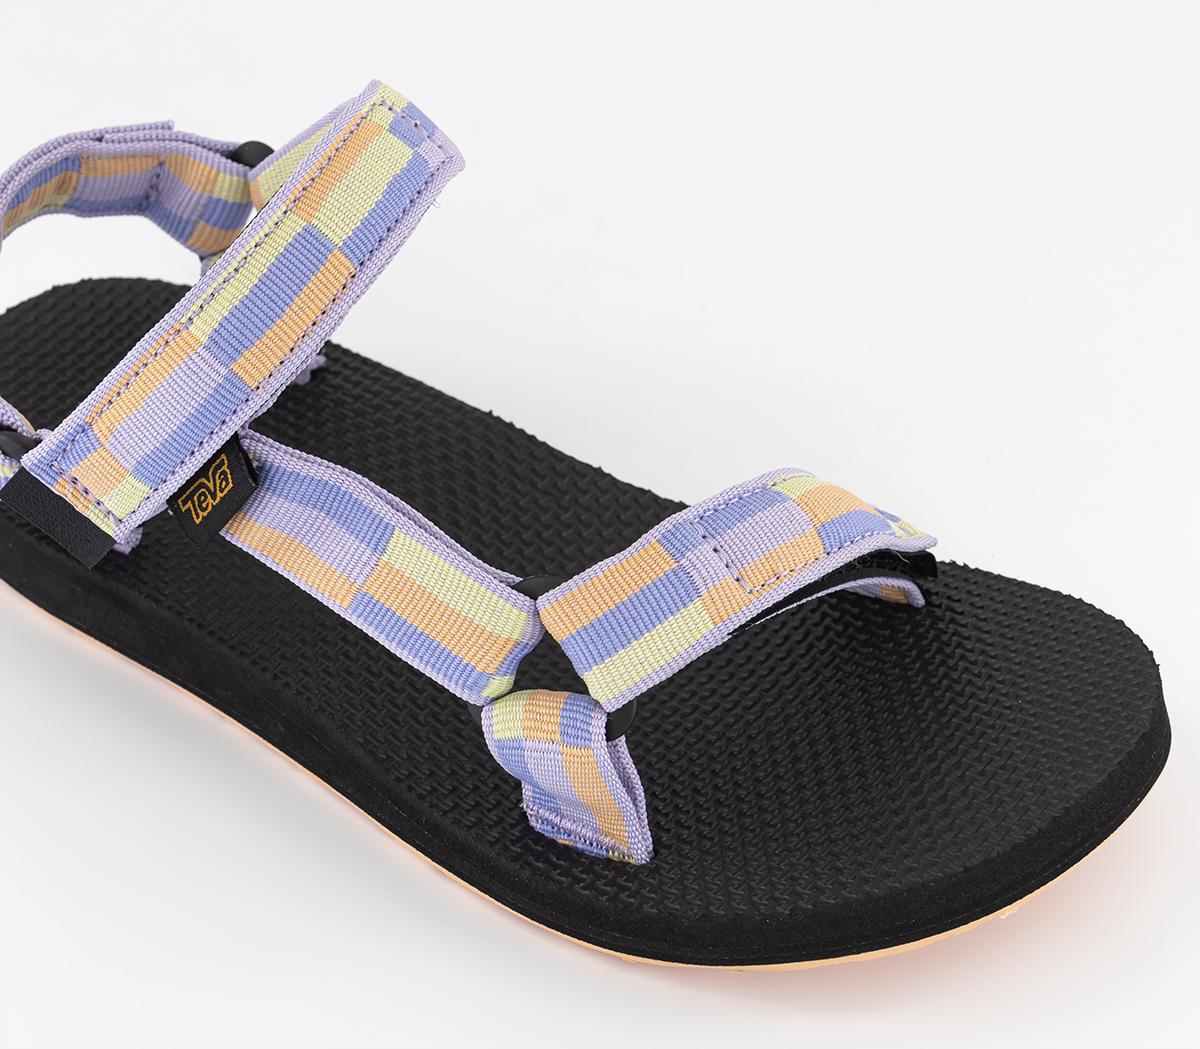 Teva Original Universal Sandals Retro Block Pastel Lilac - Women’s Sandals